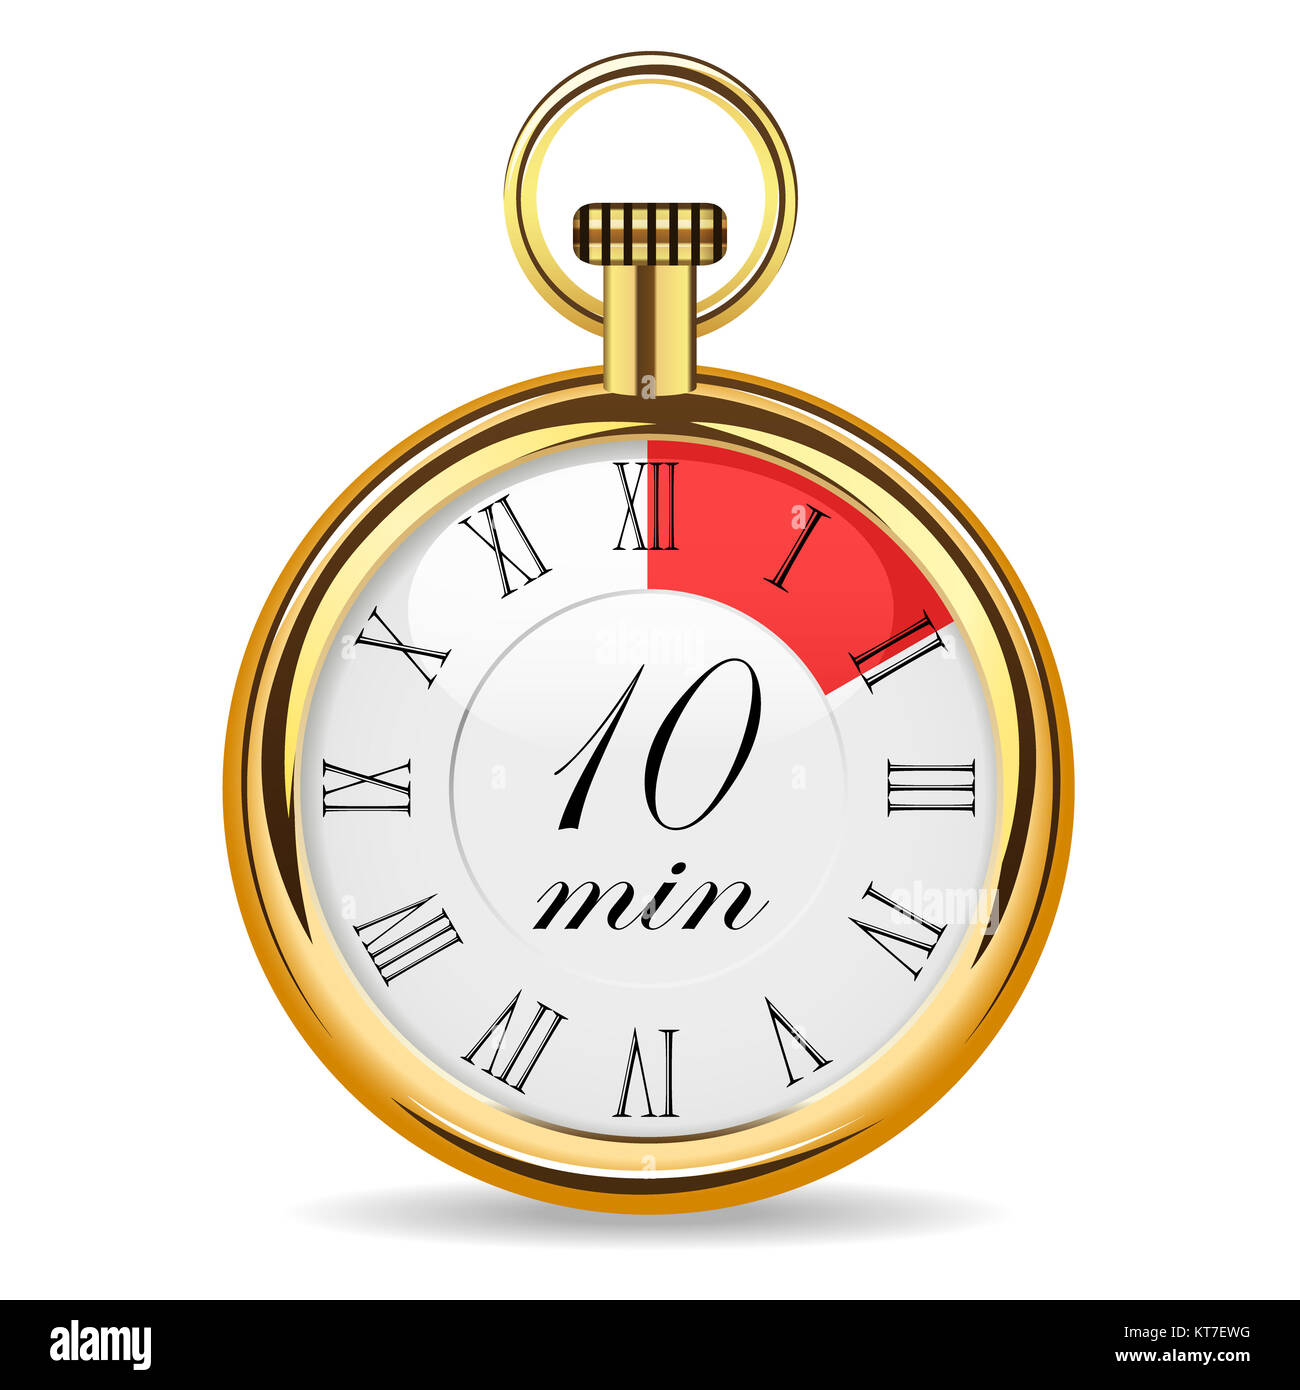 Mechanische Uhr Timer 10 Minuten Stockfotografie - Alamy